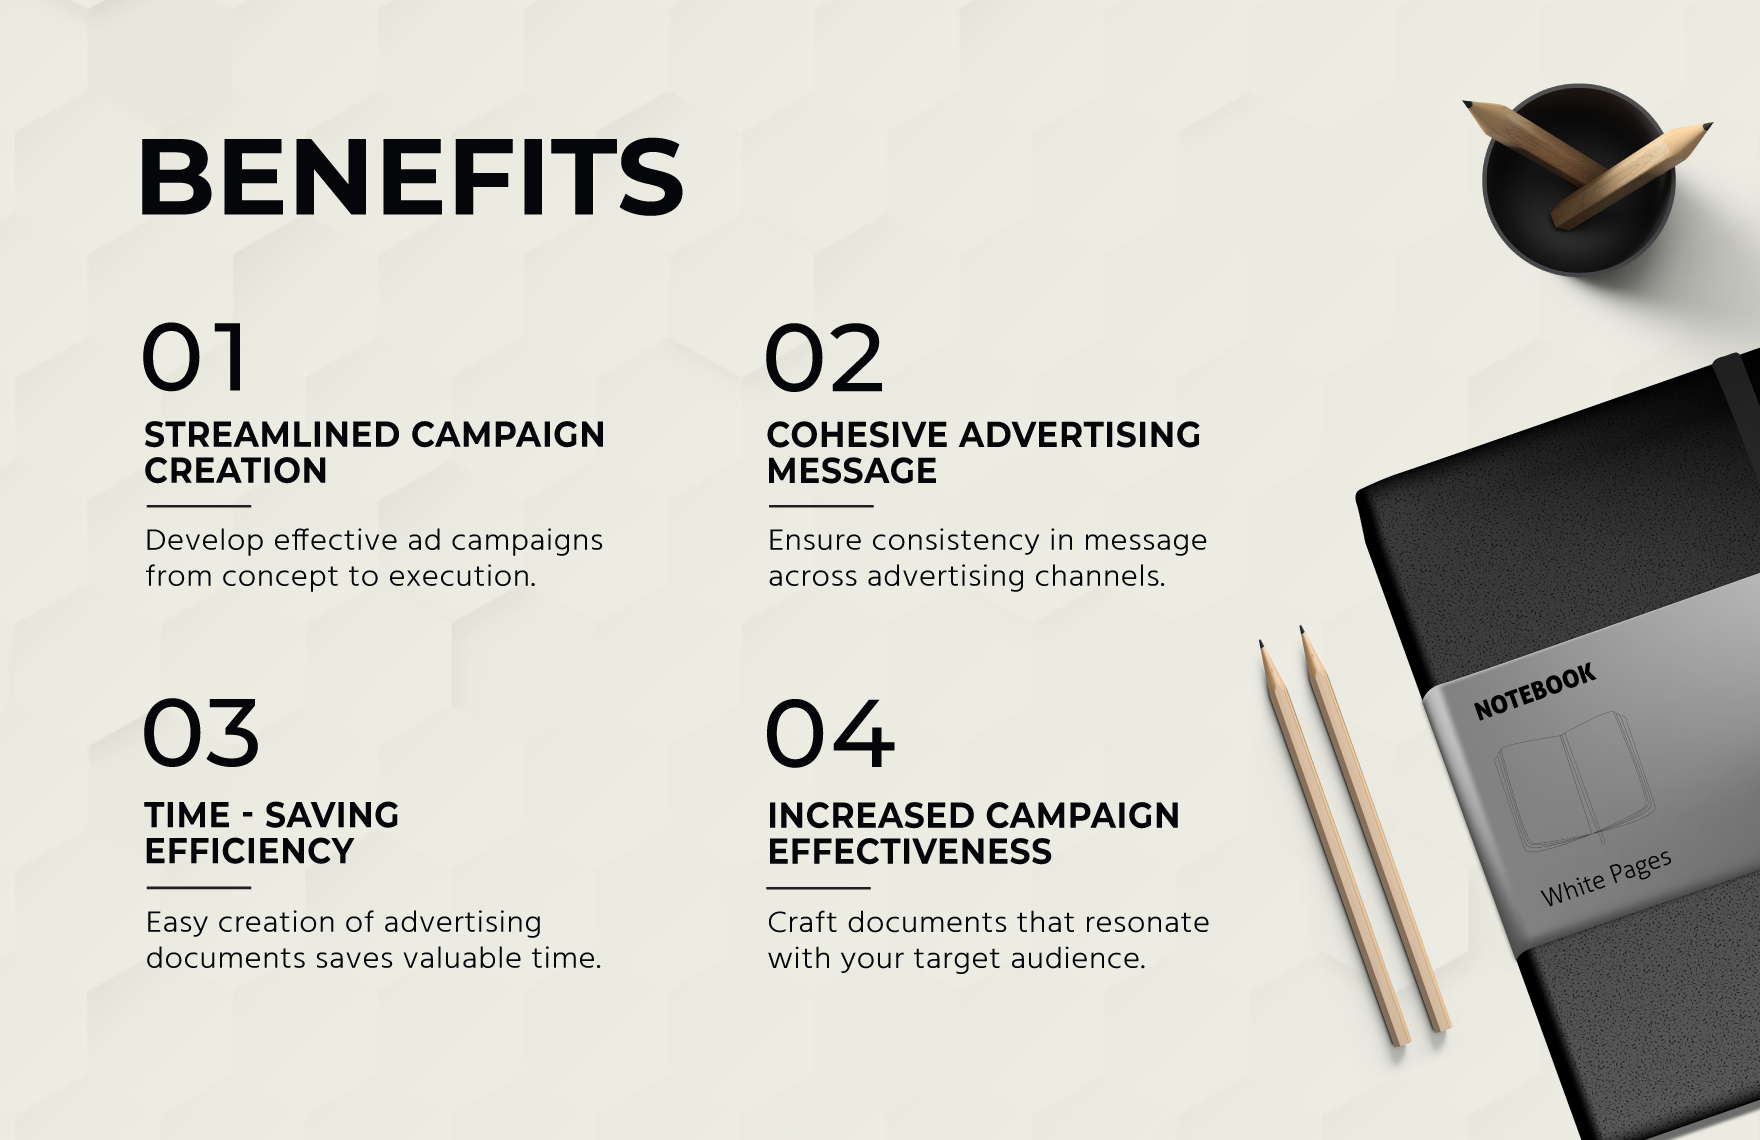 Advertising Multi-Platform Campaign Coordination Sheet Template